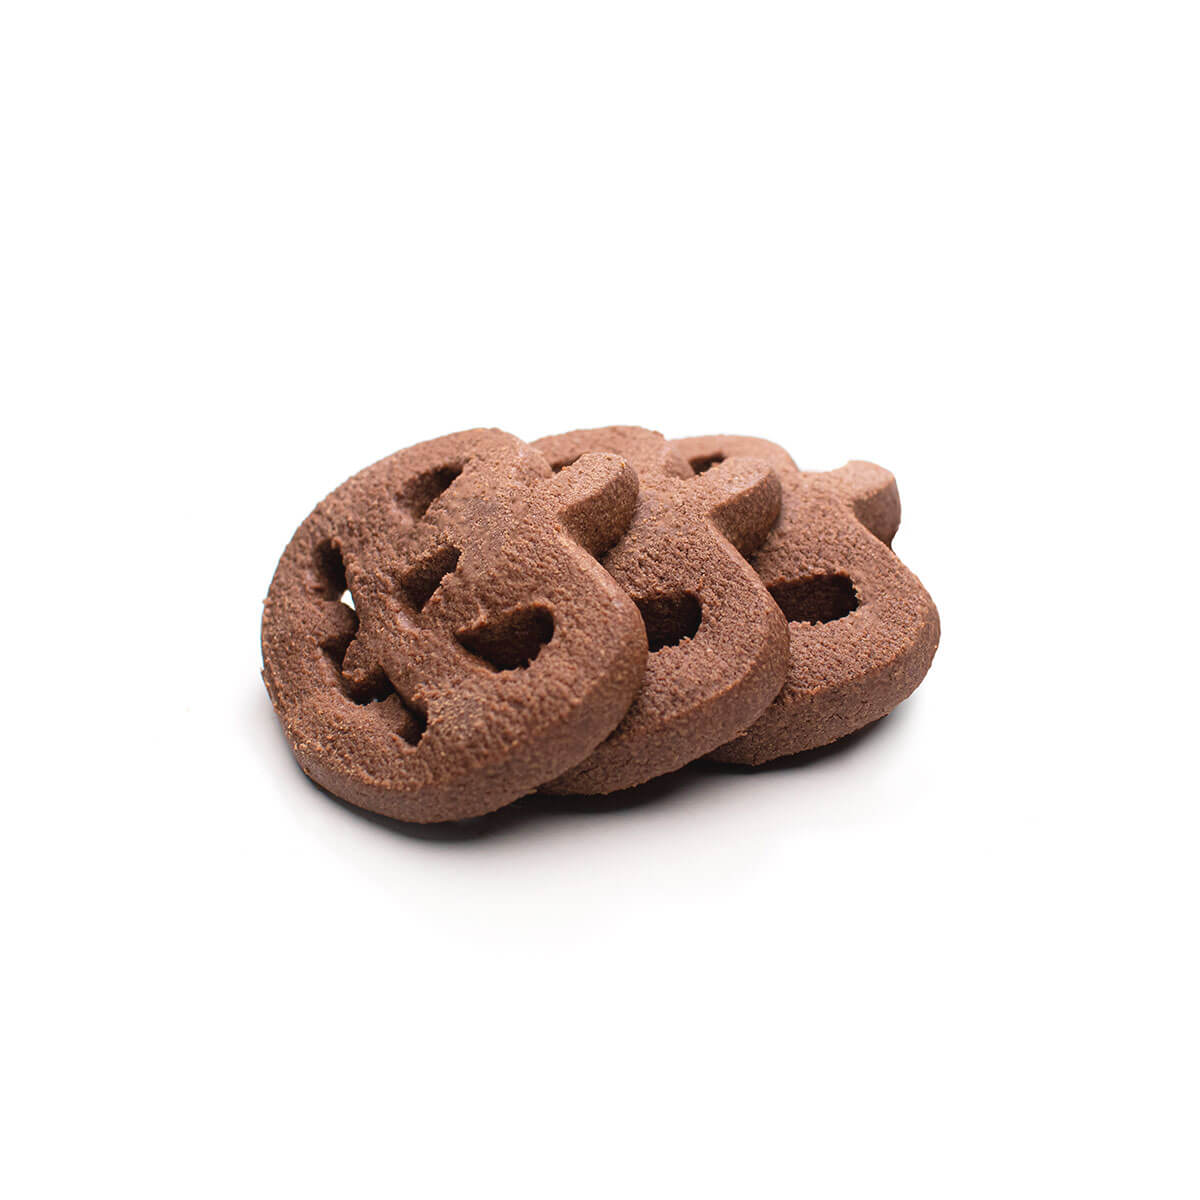 A buttery chocolate cookie shaped like a pumpkin face.